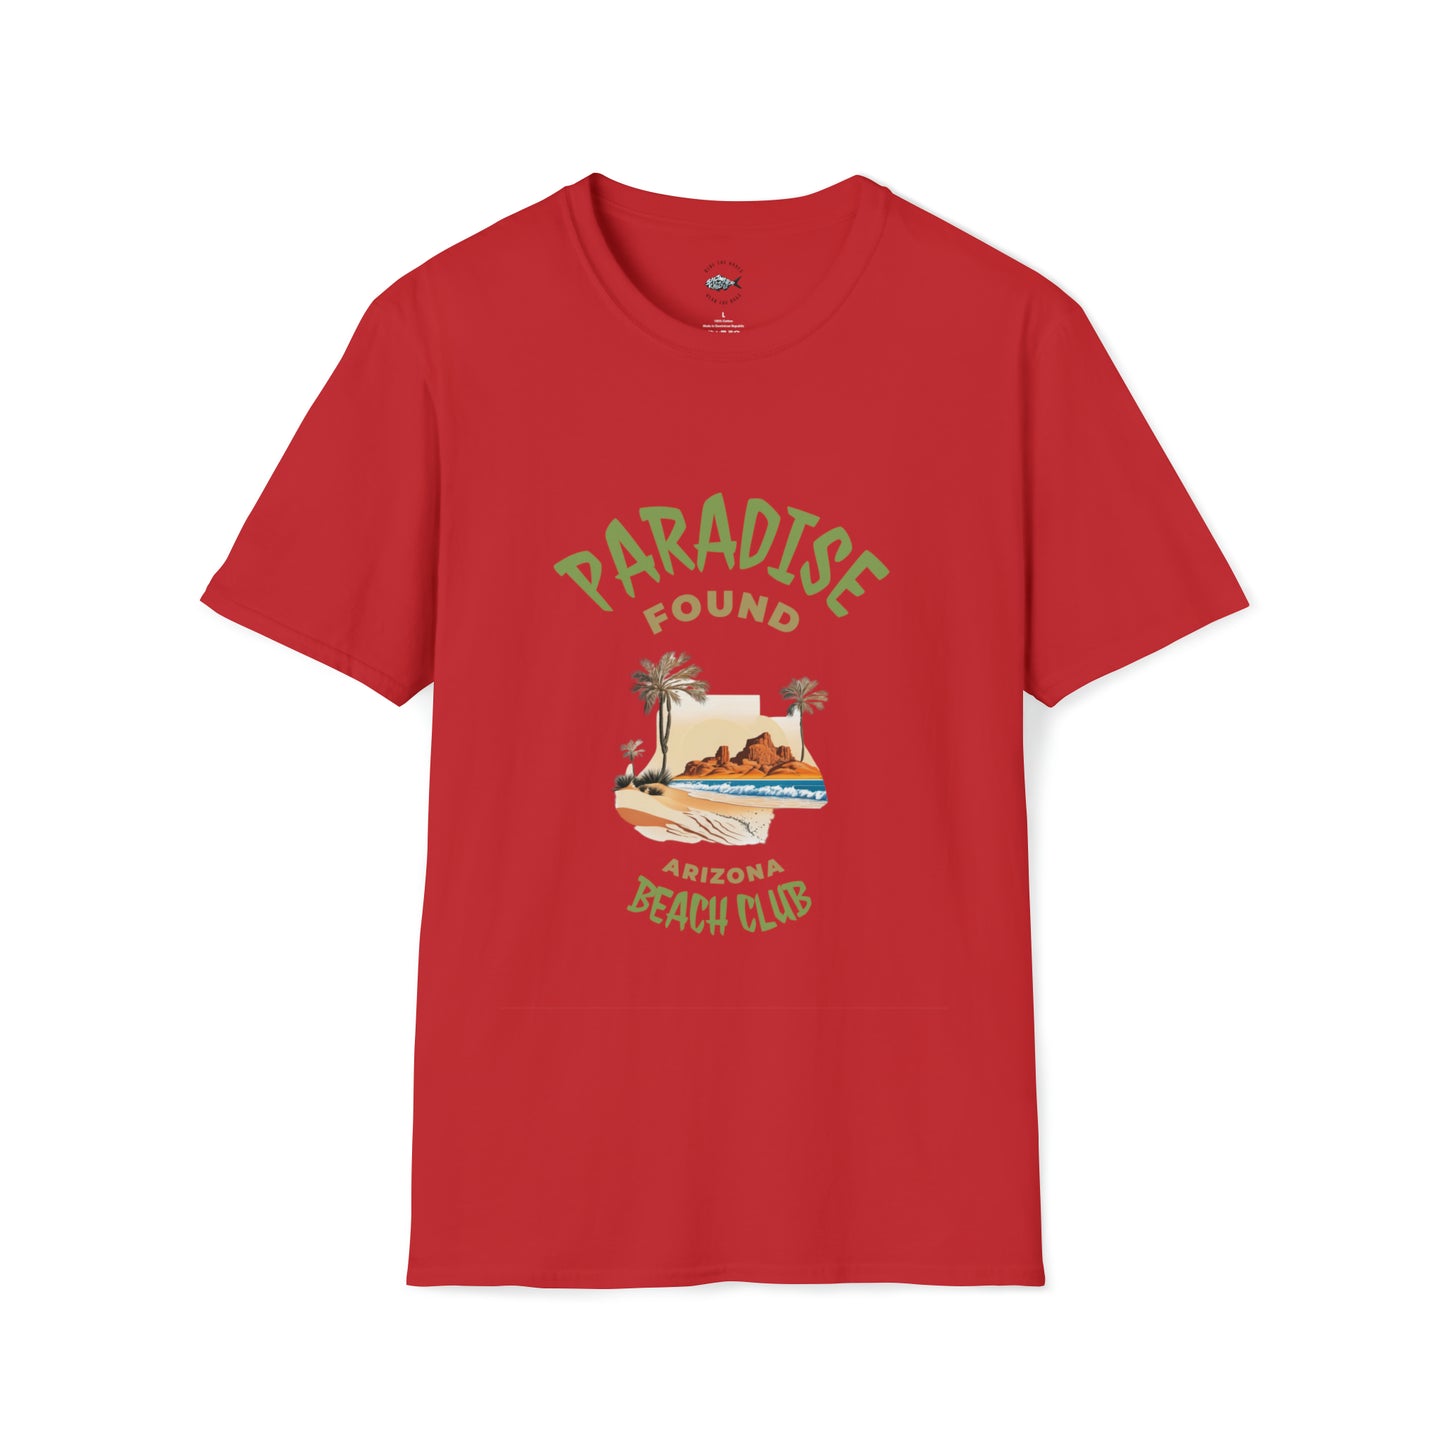 Arizona Beach Club T-Shirt